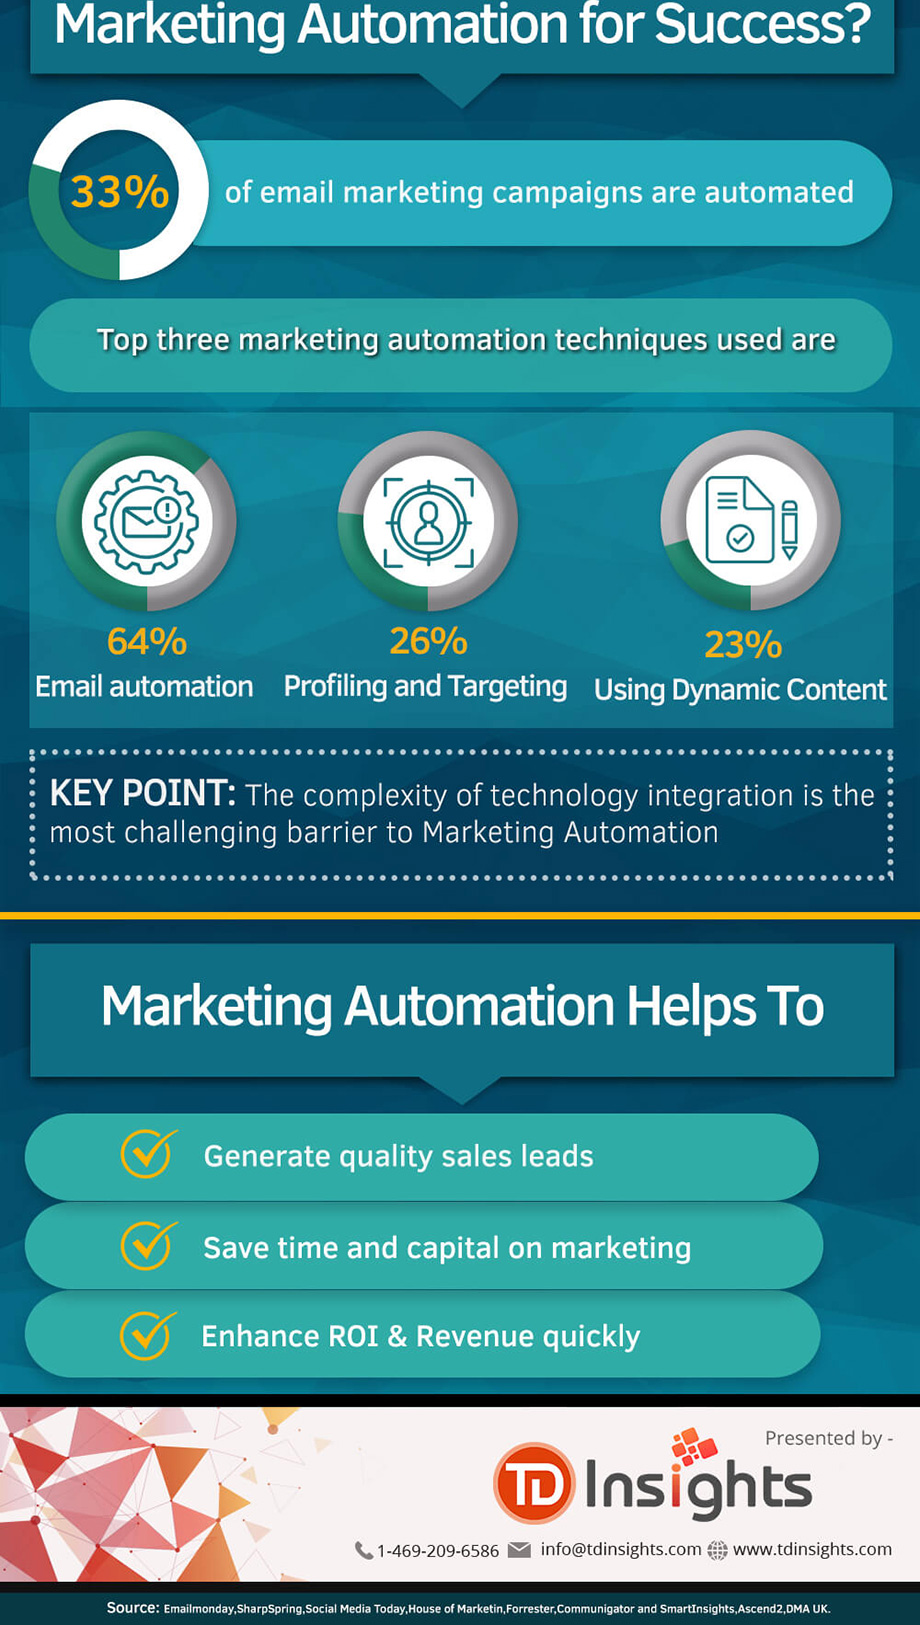 b2b-marketing-automation-role-infographic-5